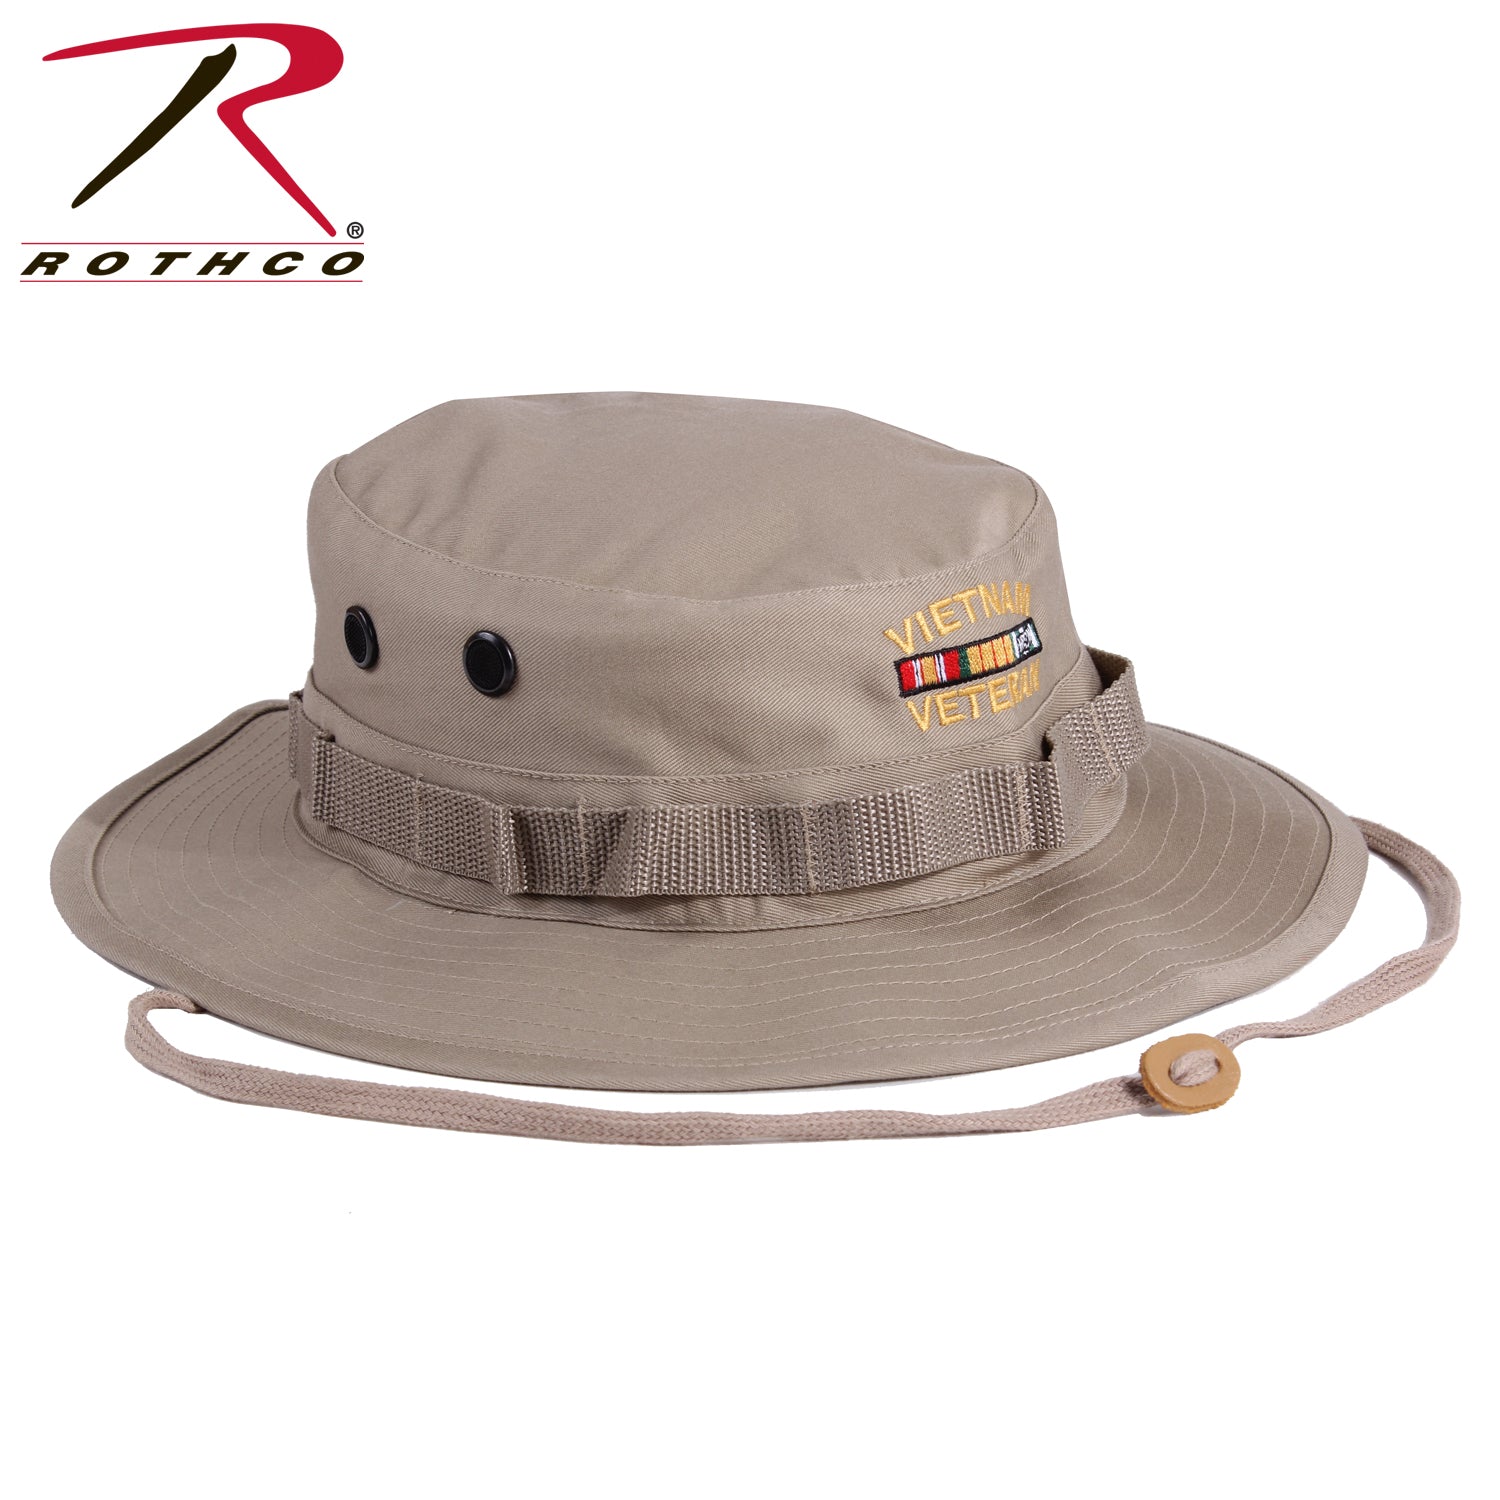 Rothco Vietnam Veteran Boonie Hat - Tactical Choice Plus